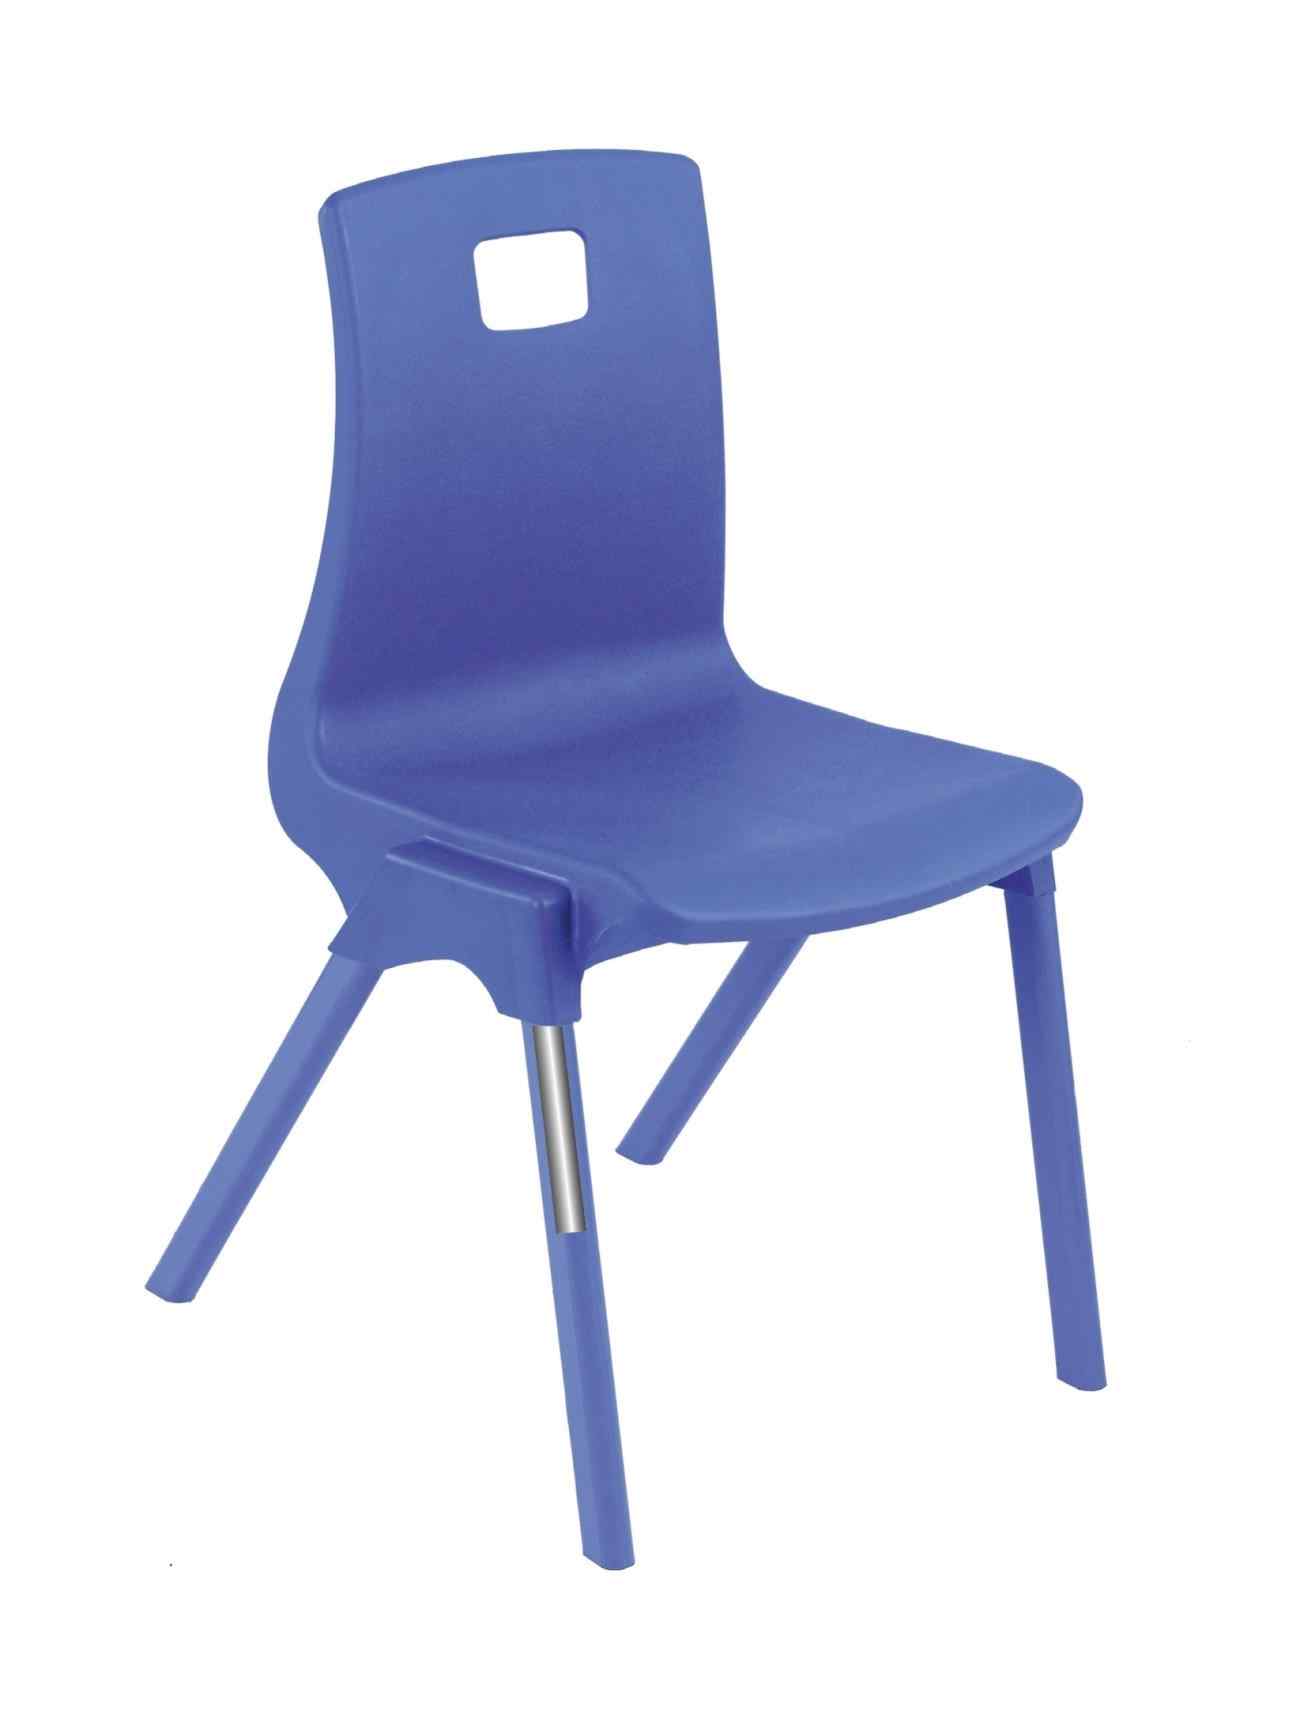 Classroom school chair.